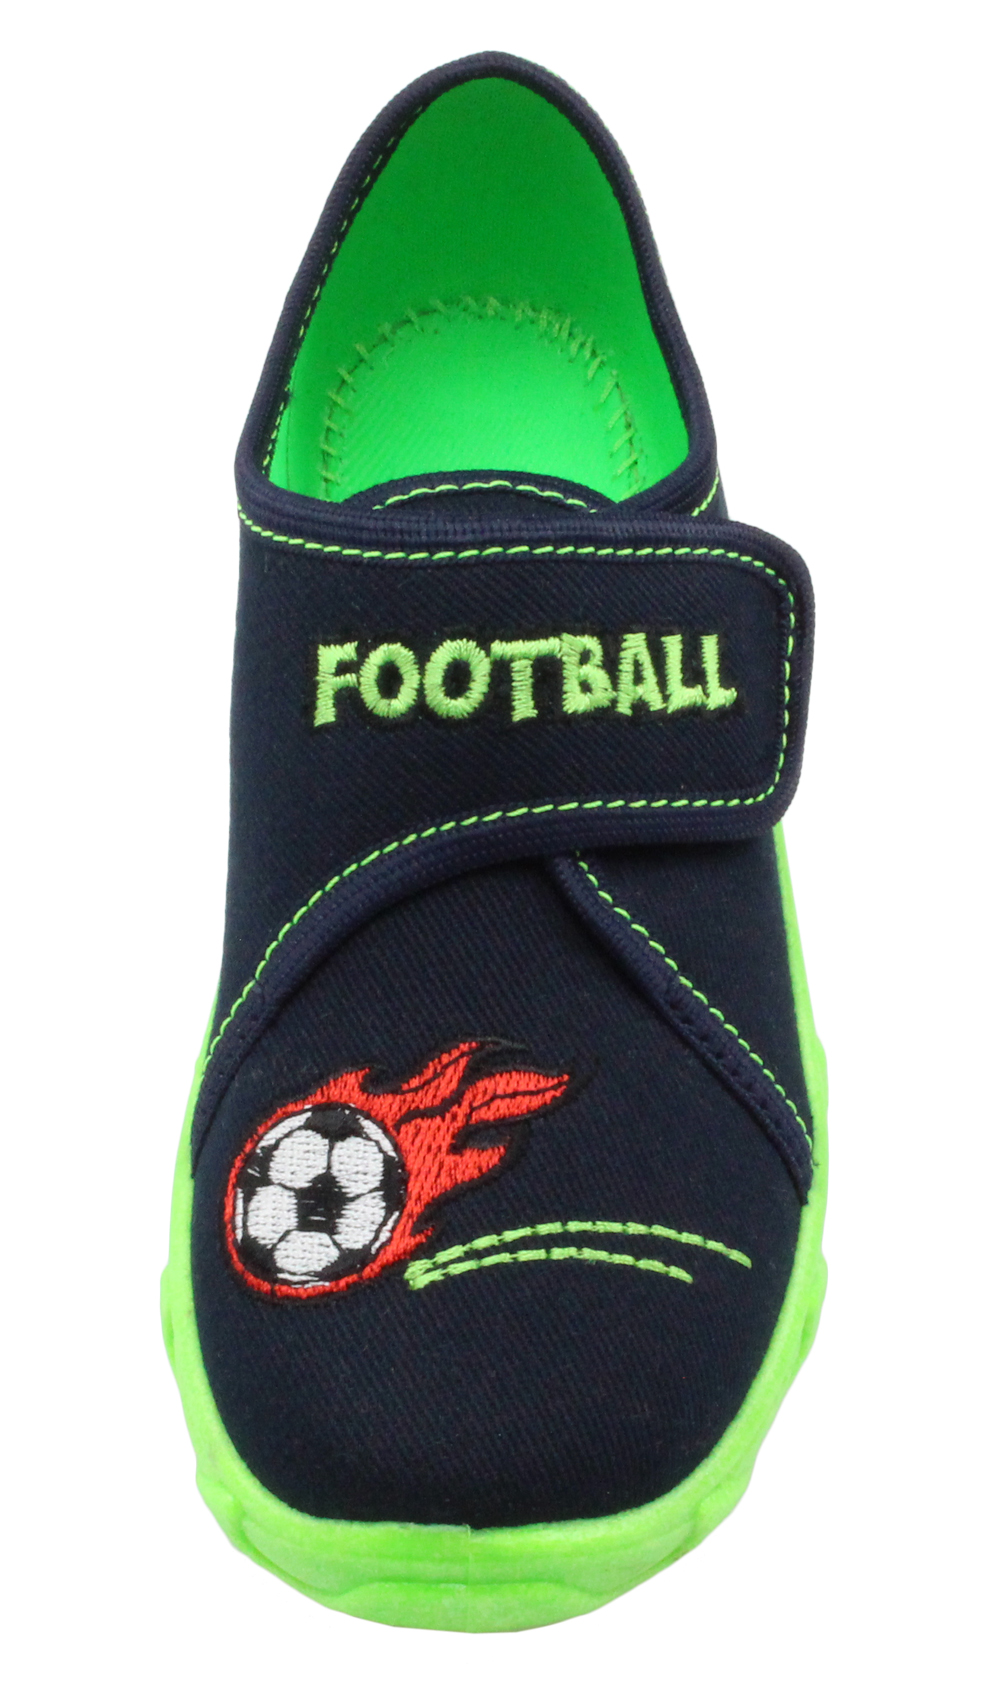 boys football slippers